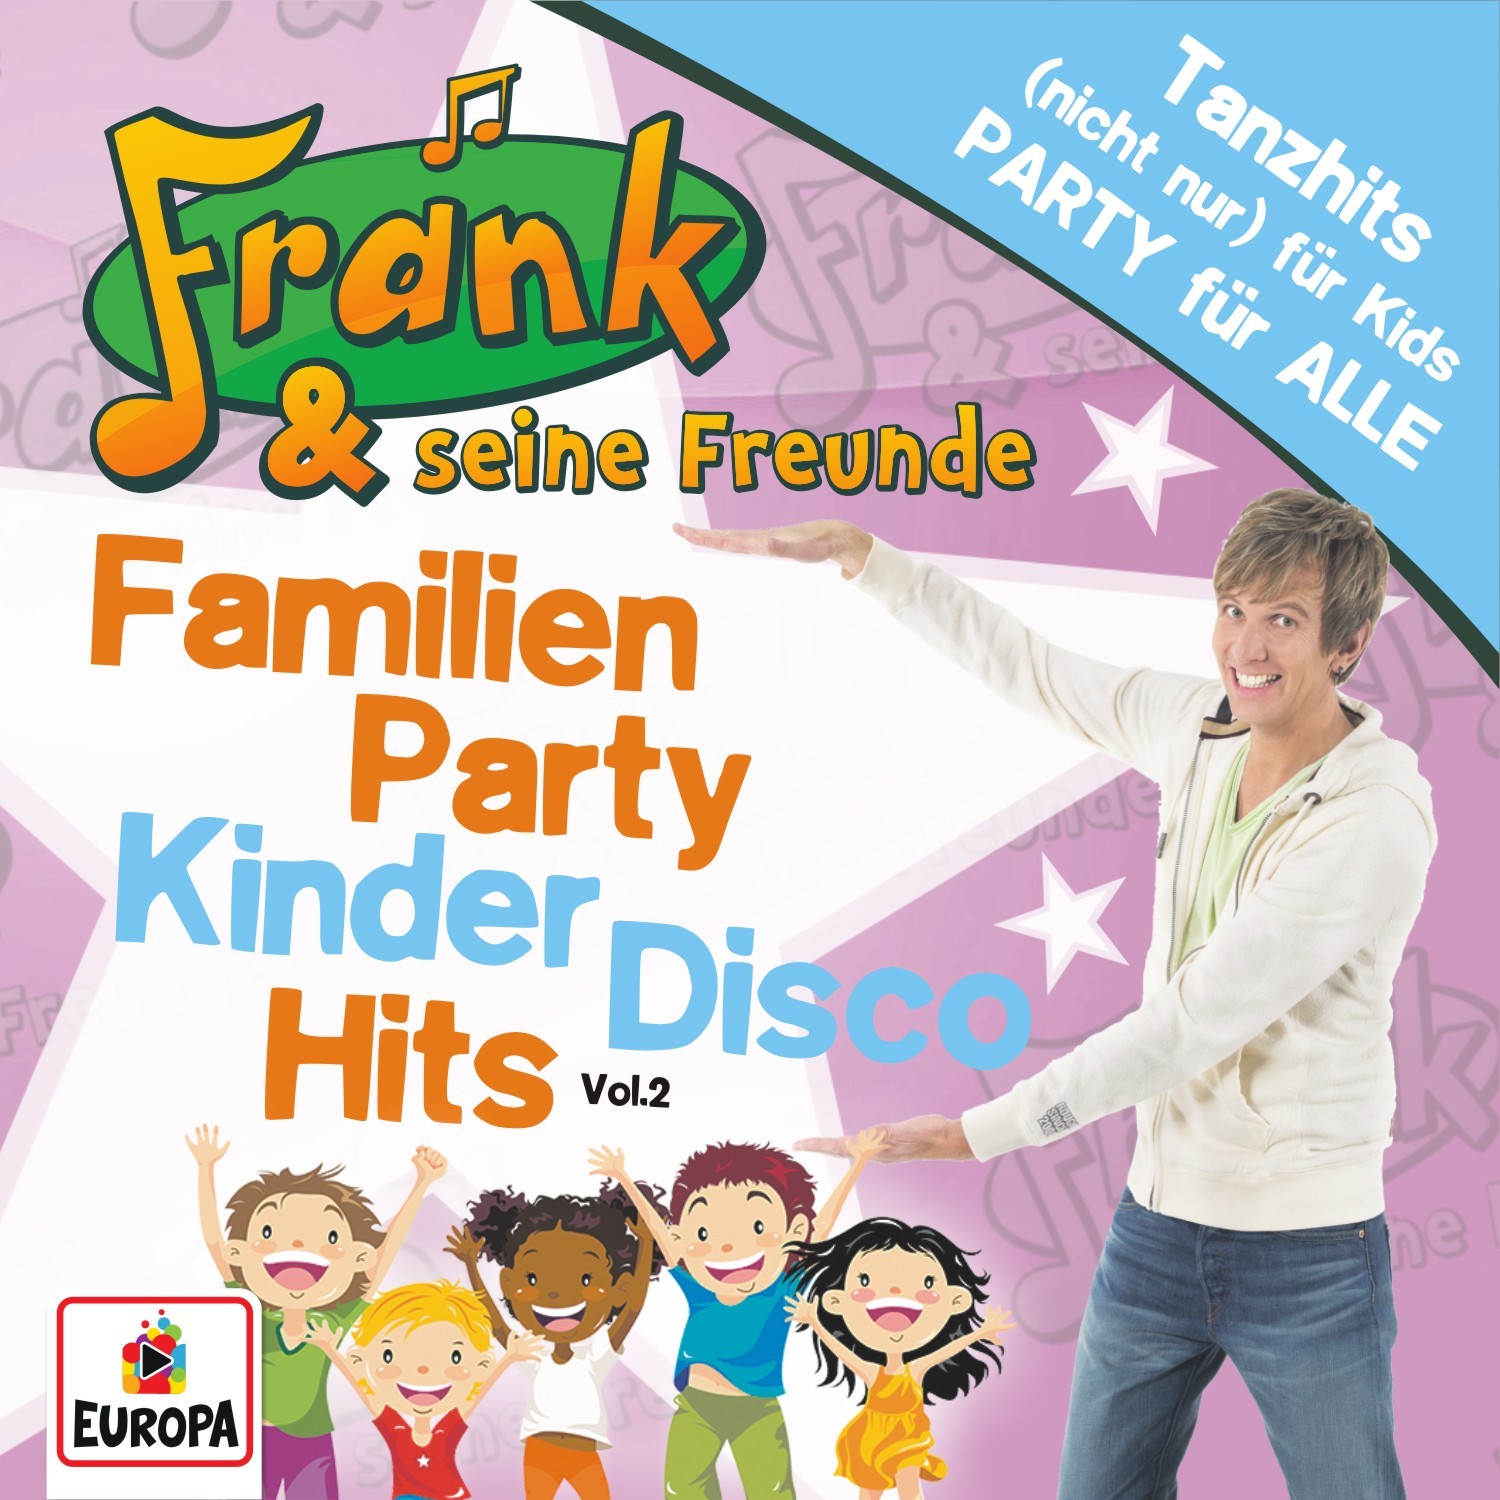 Frank & seine Freunde : Familien Party Kinder Disco Hits Vol. 2